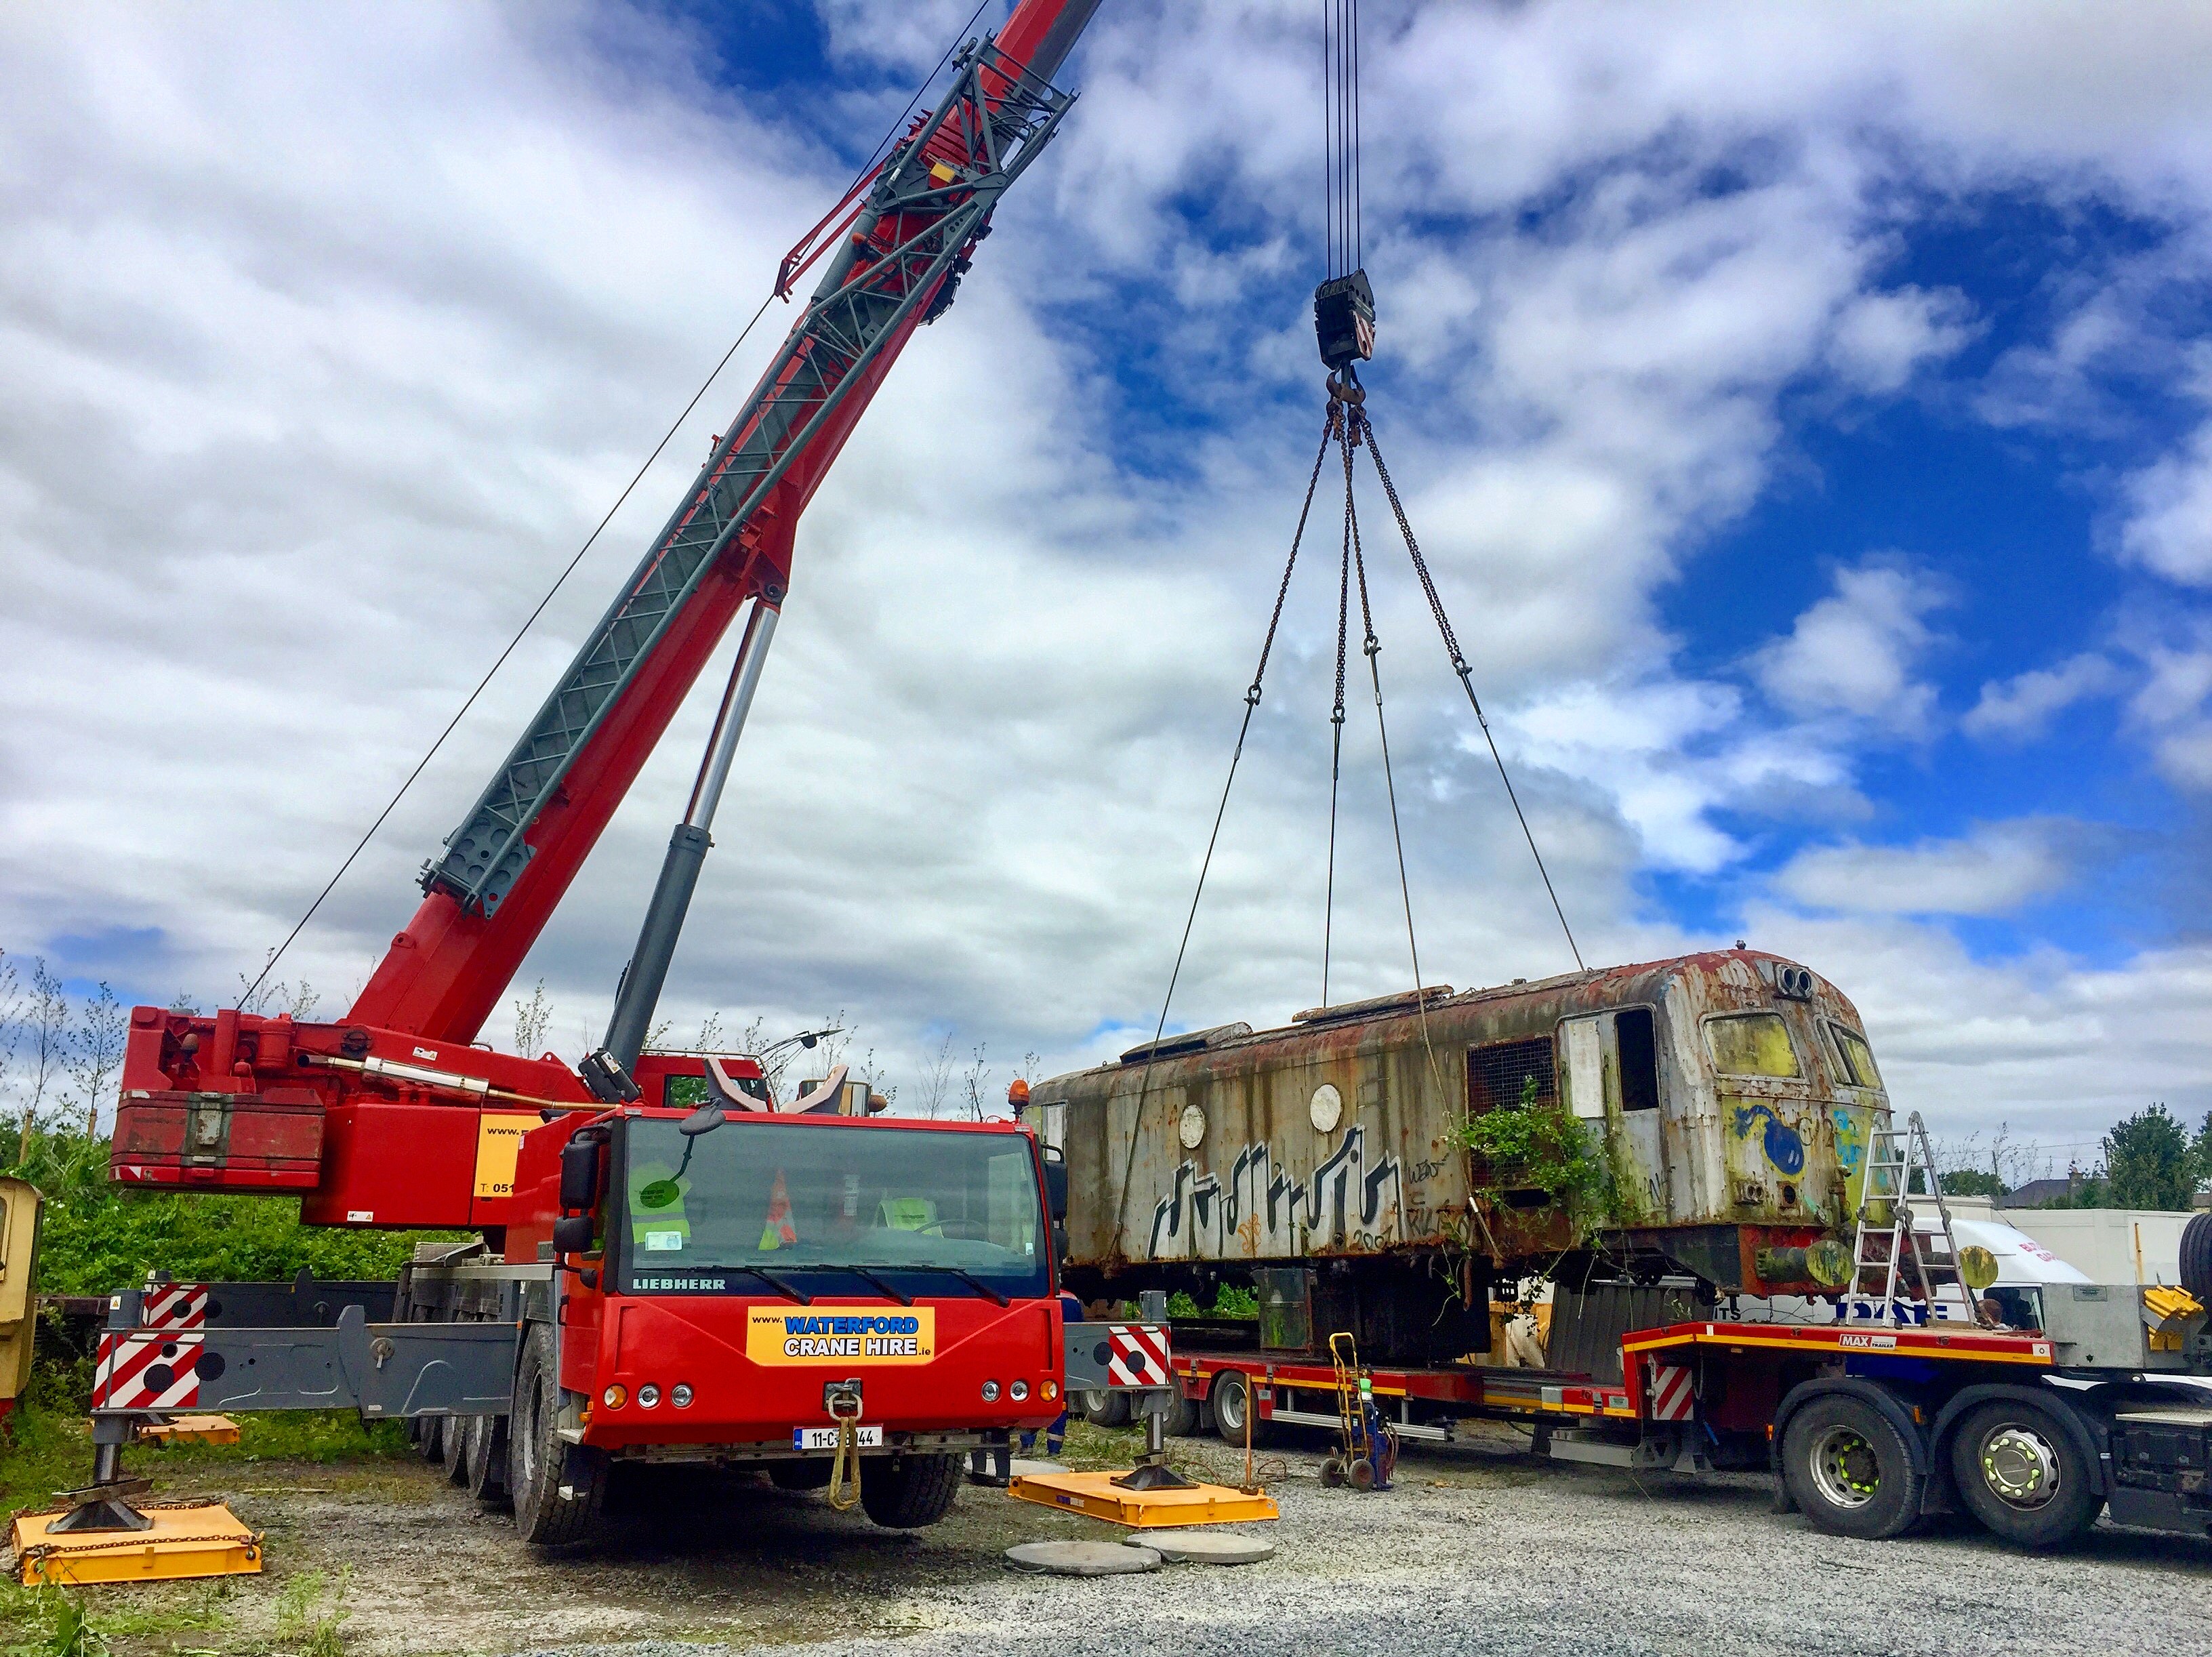 Loading a 23 tonne locomotive in Kilmacow, Co. Kilkenny